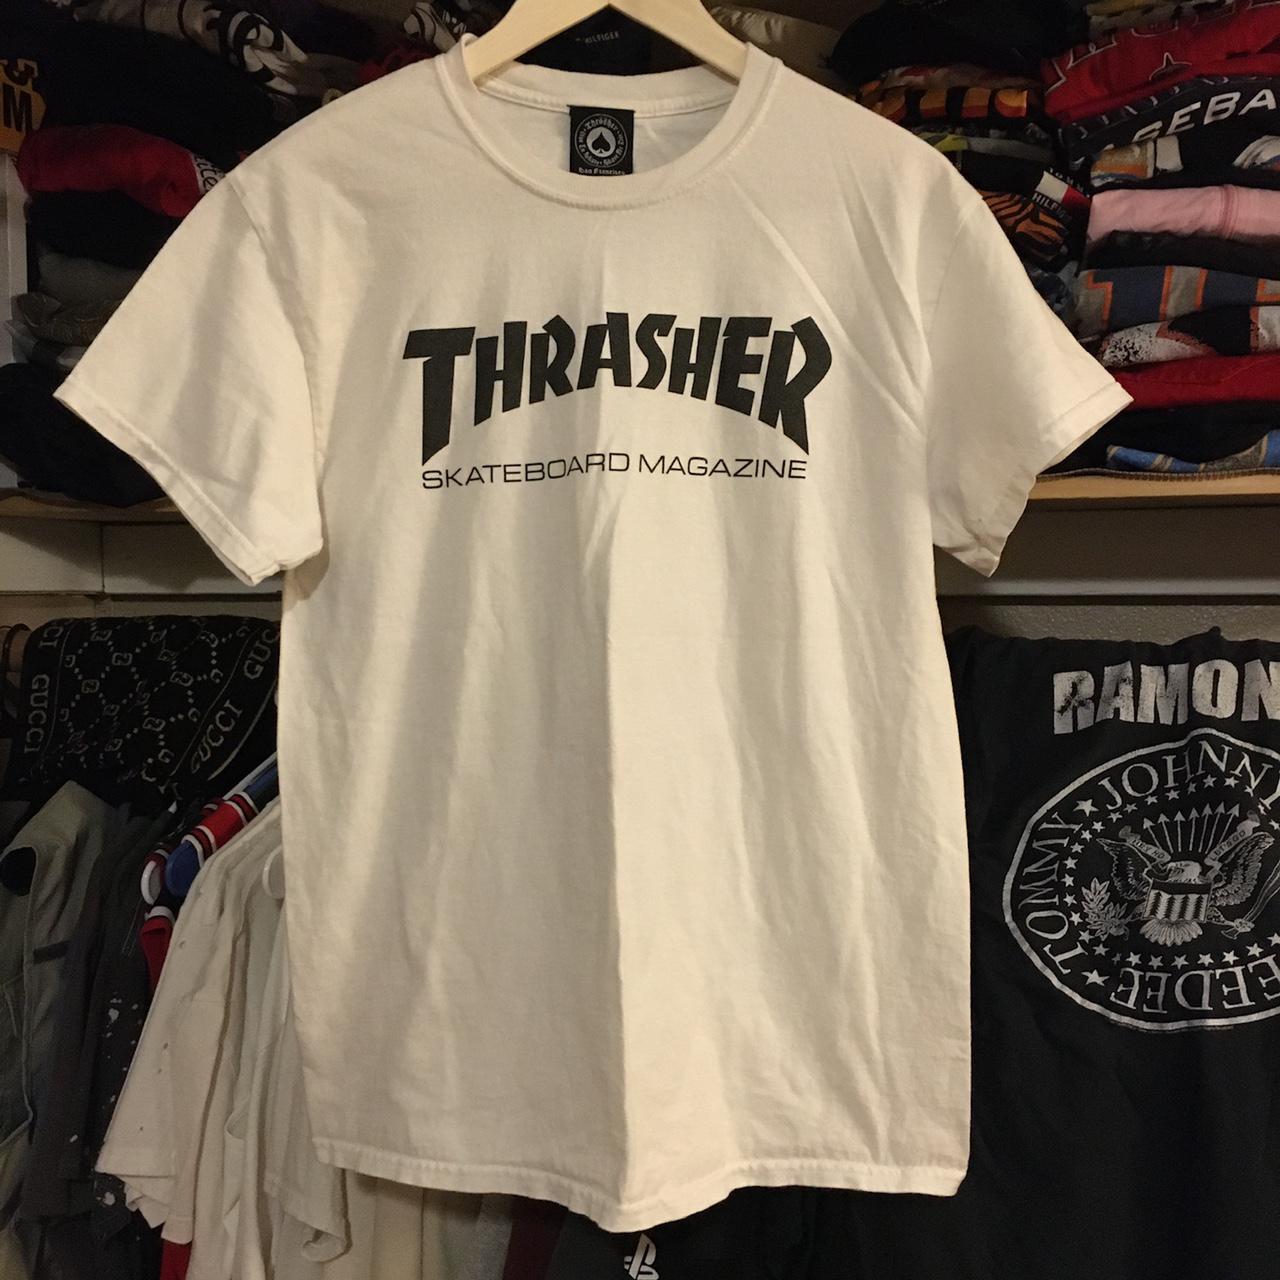 Thrasher Men's White and Black T-shirt